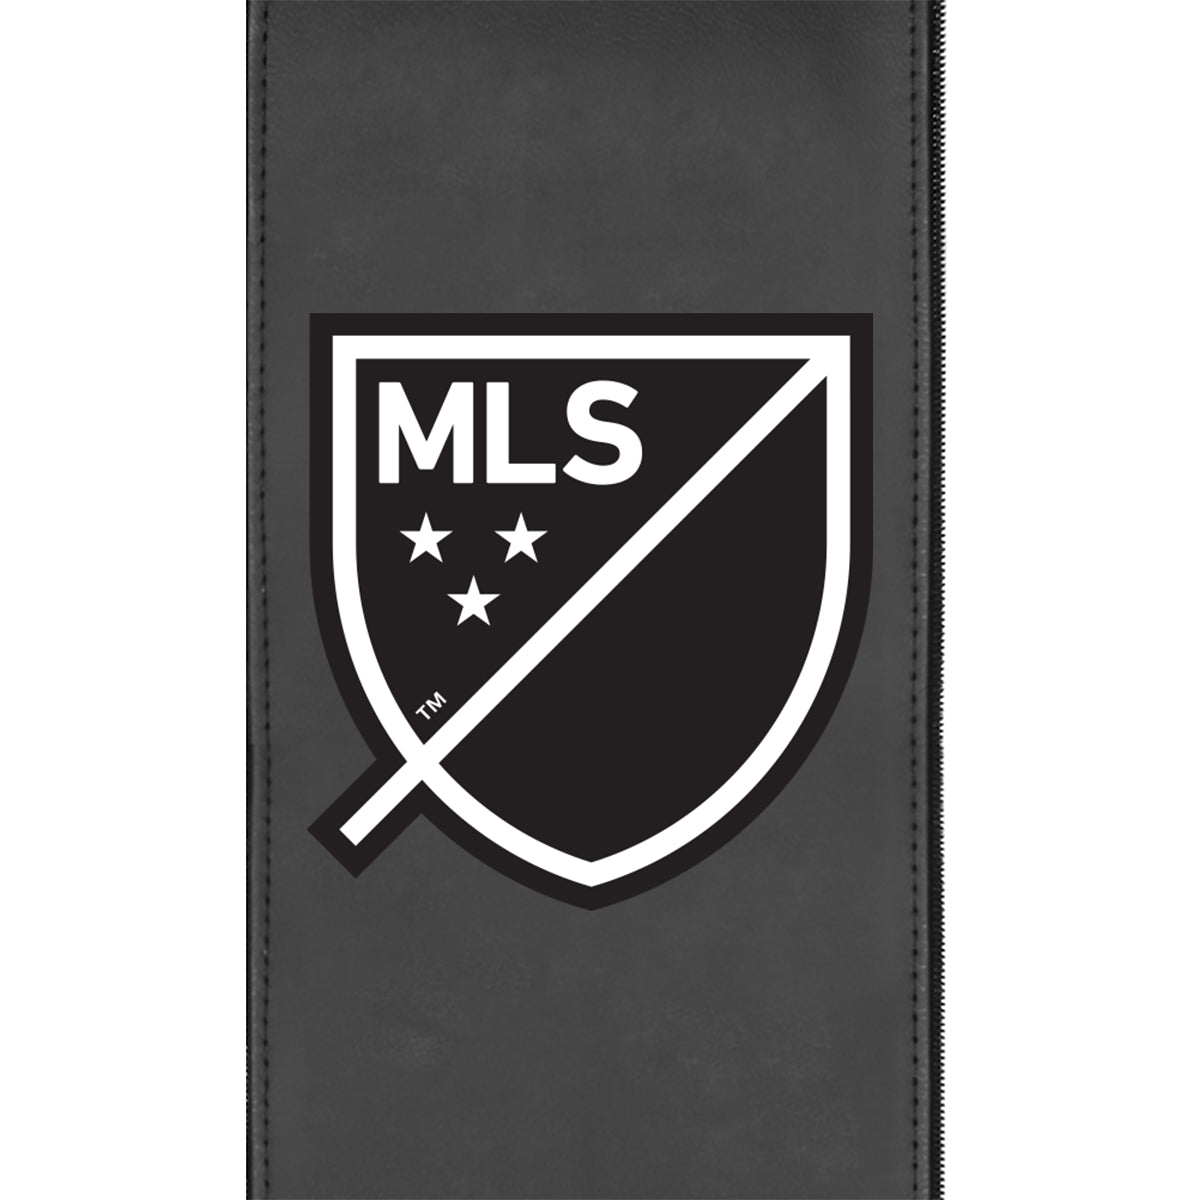 Silver Club Chair with Major League Soccer Alternate Logo